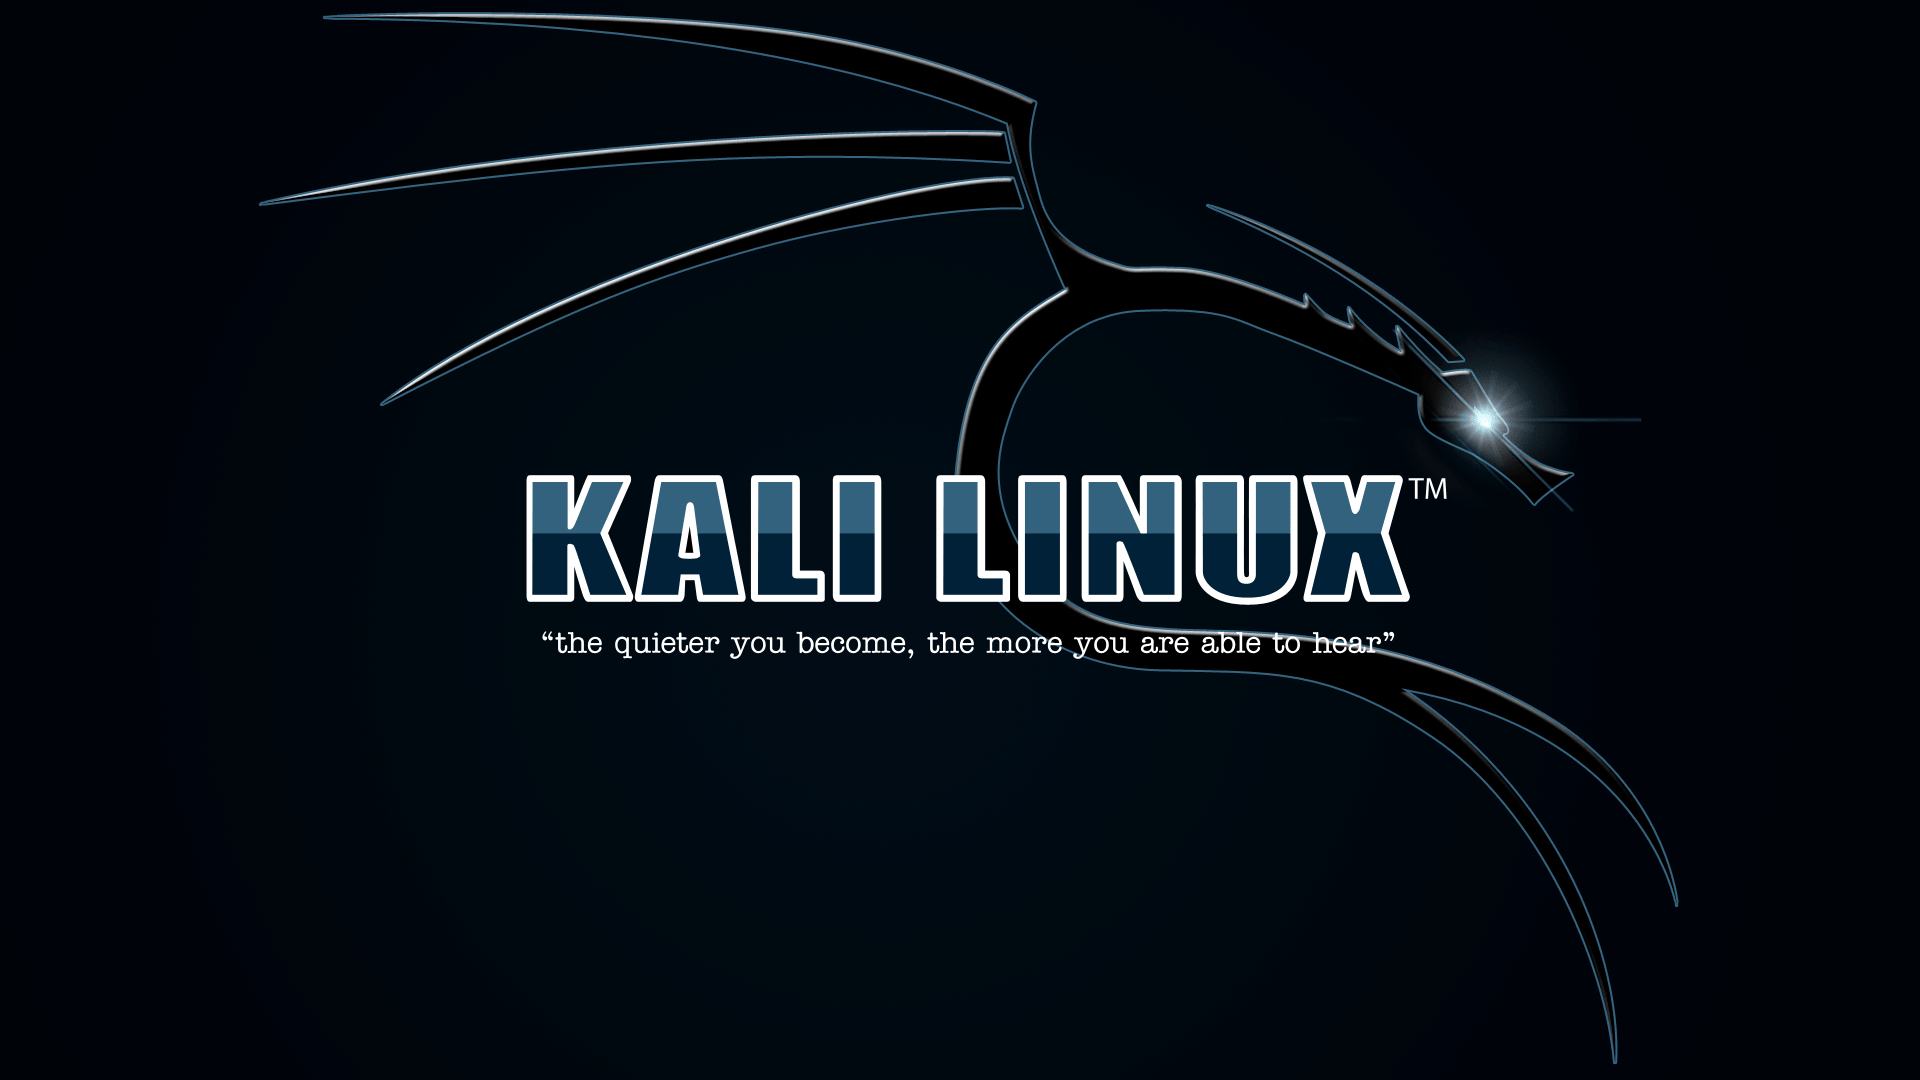 kali linux latest version free download